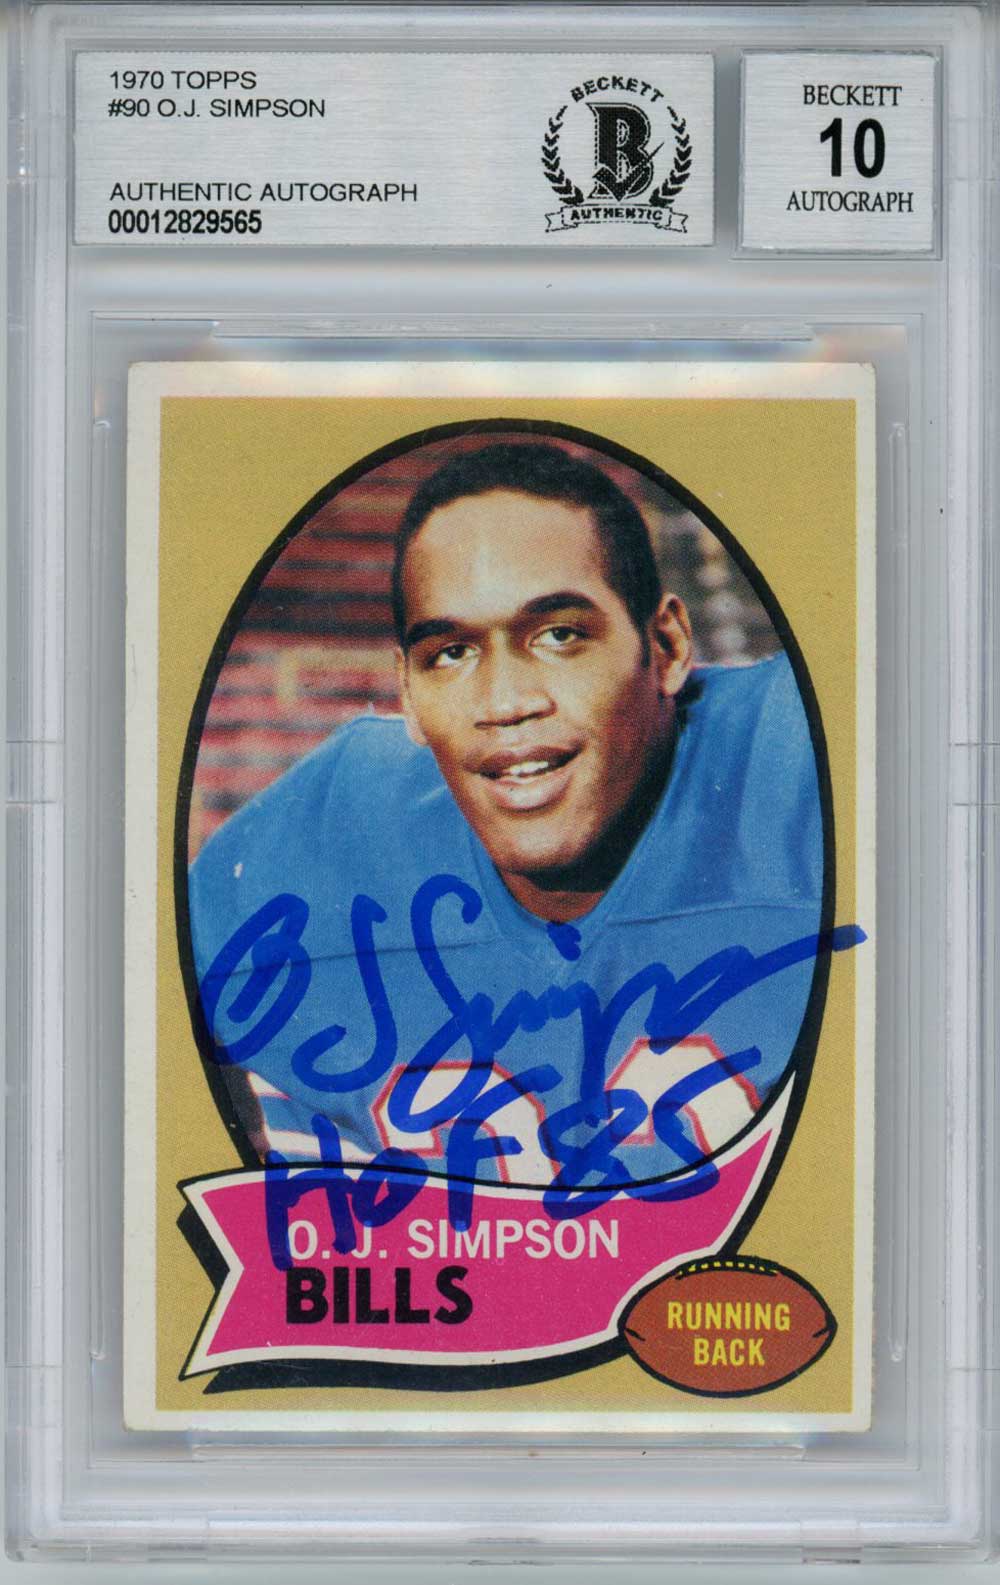 O.J. Simpson Autographed Bills 1970 Topps #90 Rookie Card HOF BAS 10 Slab 31388